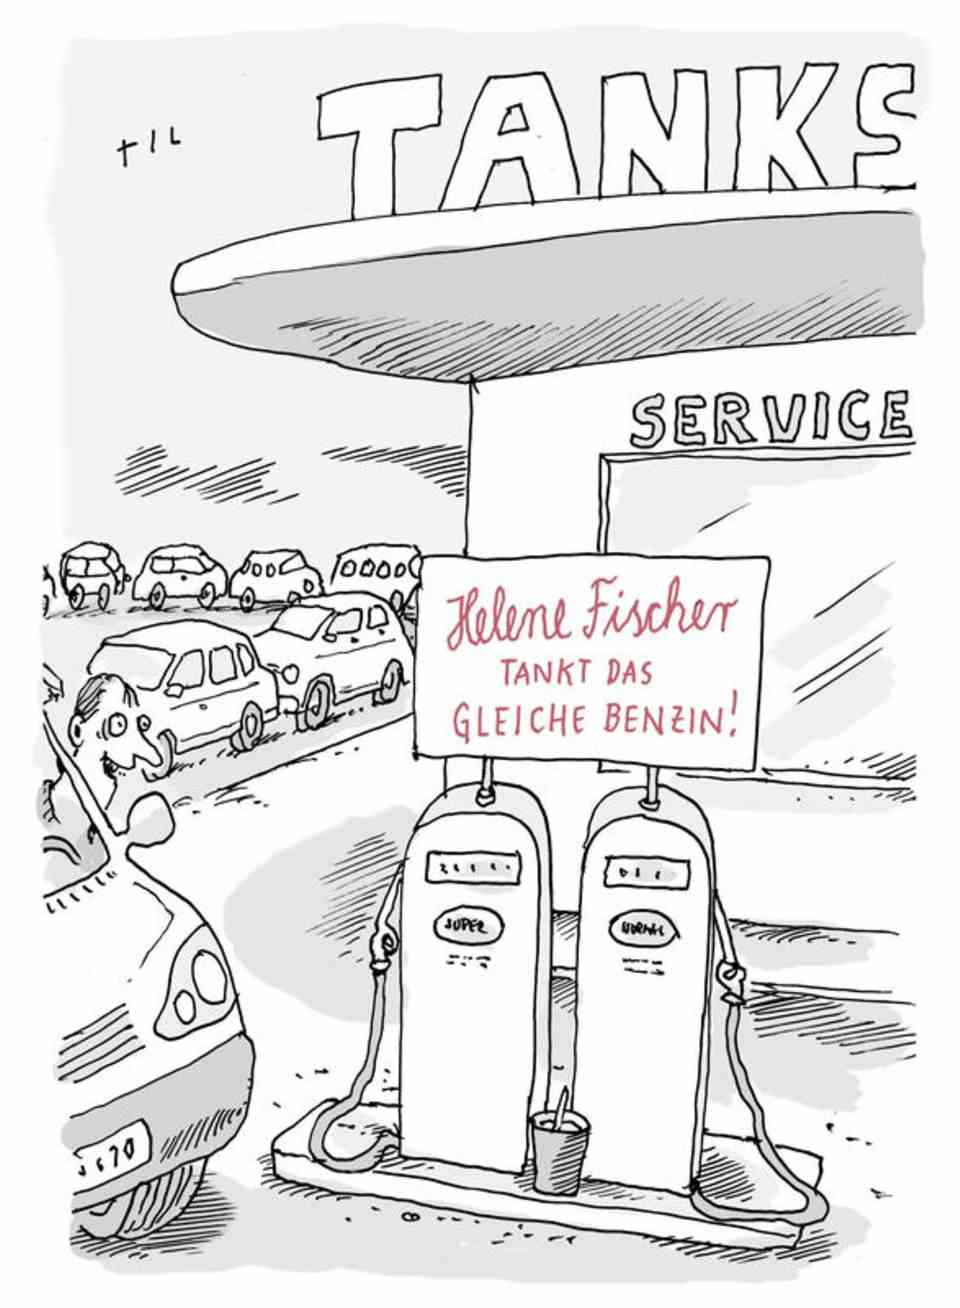 Car cartoons: What is Helene Fischer actually doing?